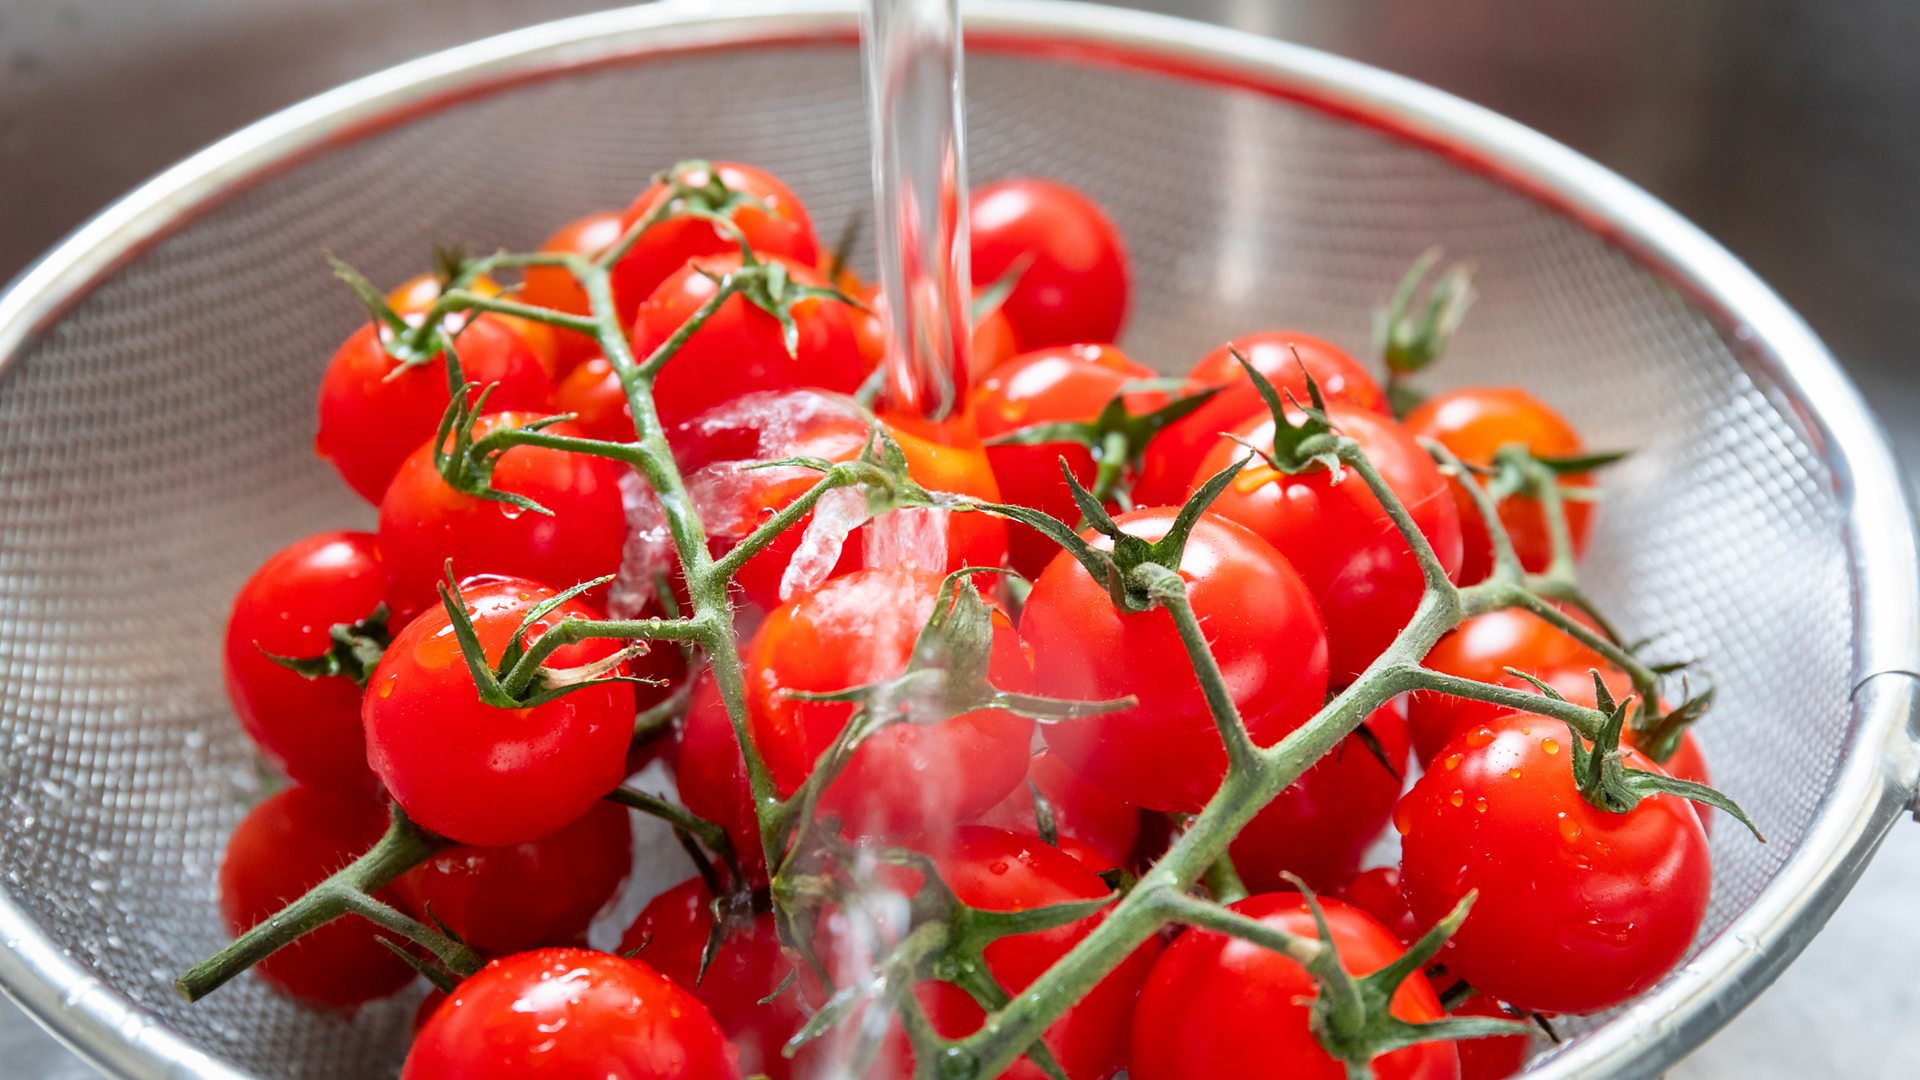 7 Myths About Washing Your Produce - Modern Farmer